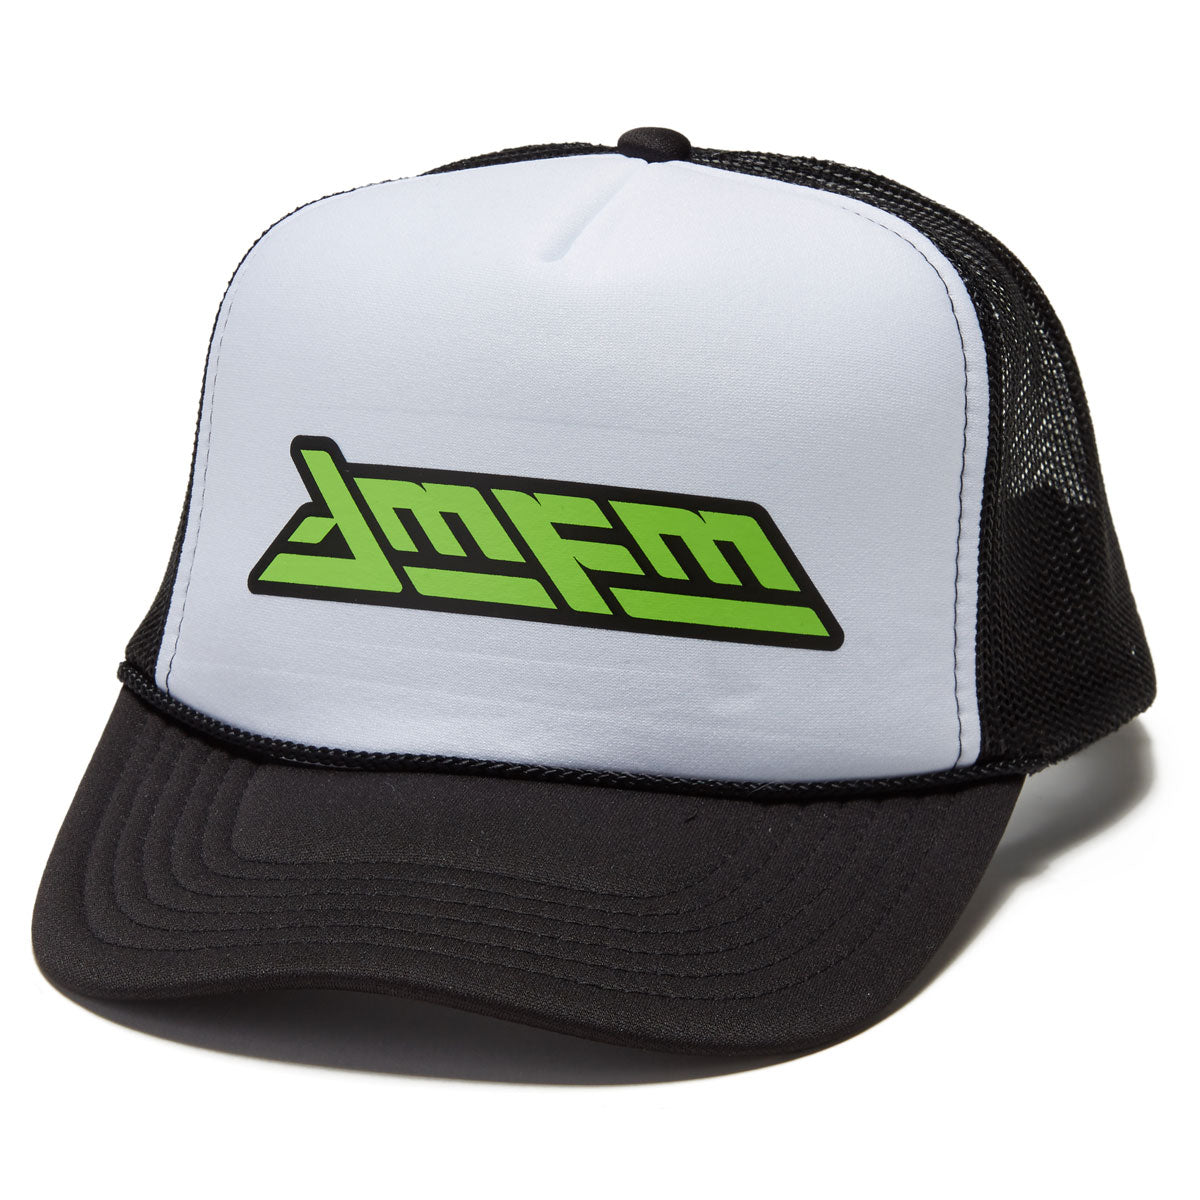 AM-FM Tracker Trucker Hat - White image 1